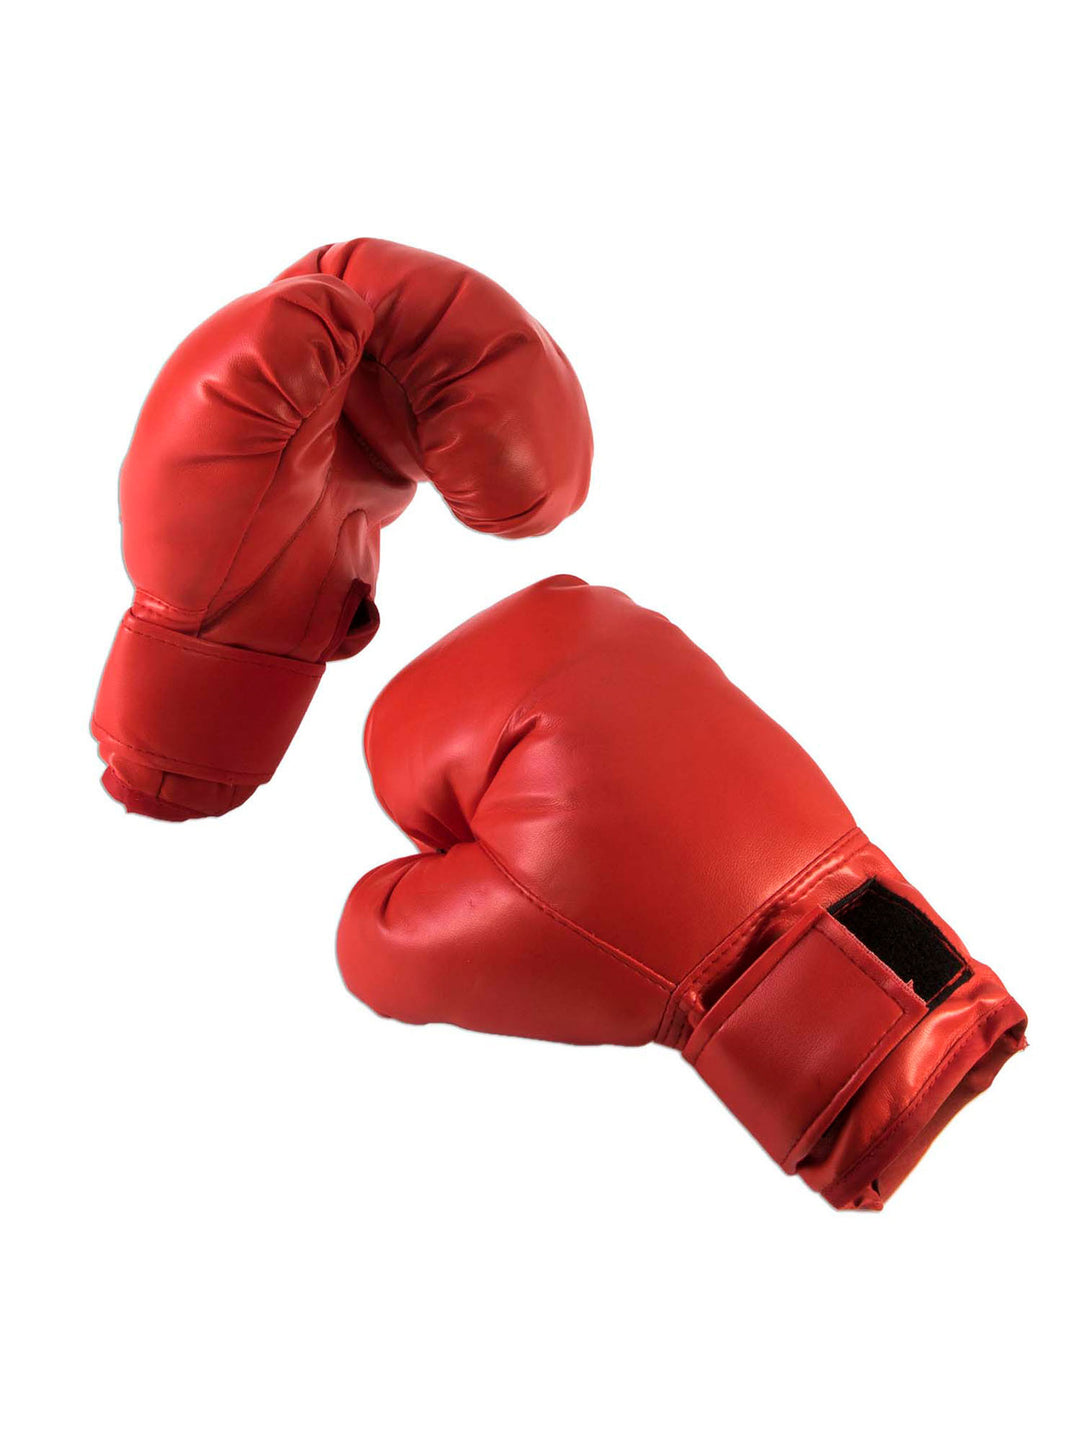 Adult Boxing Gloves Joke Costume Accessory